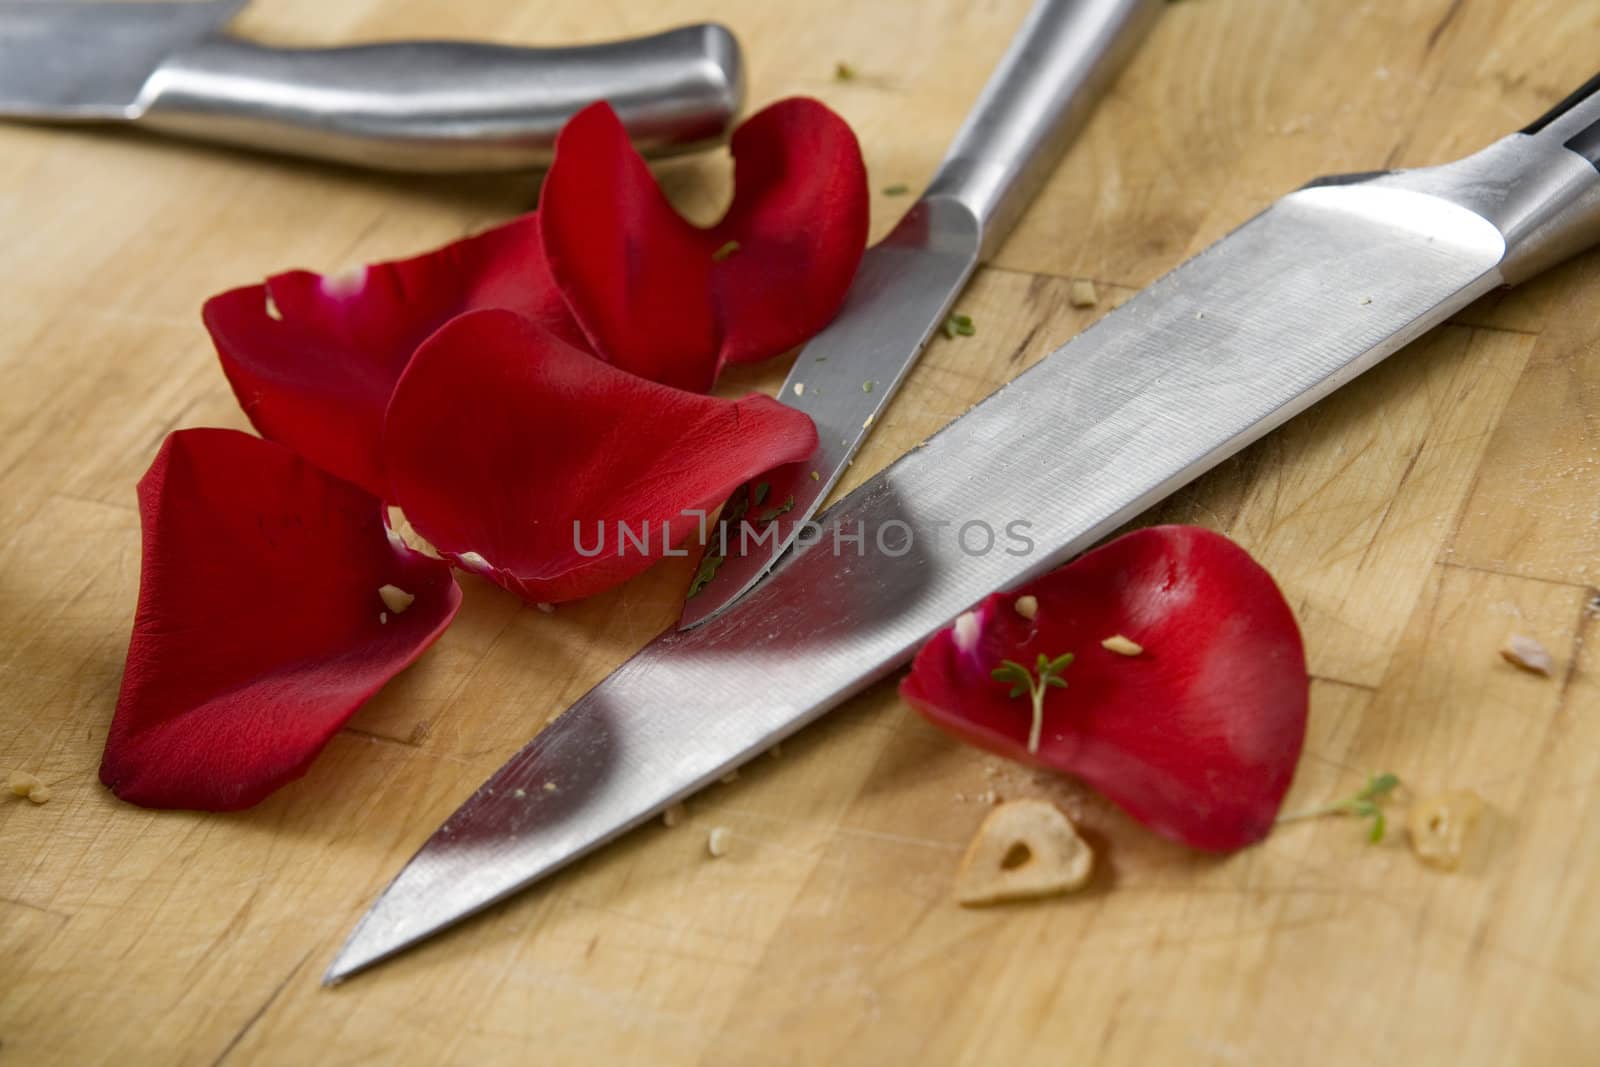 Petal rose and knife by elenarostunova